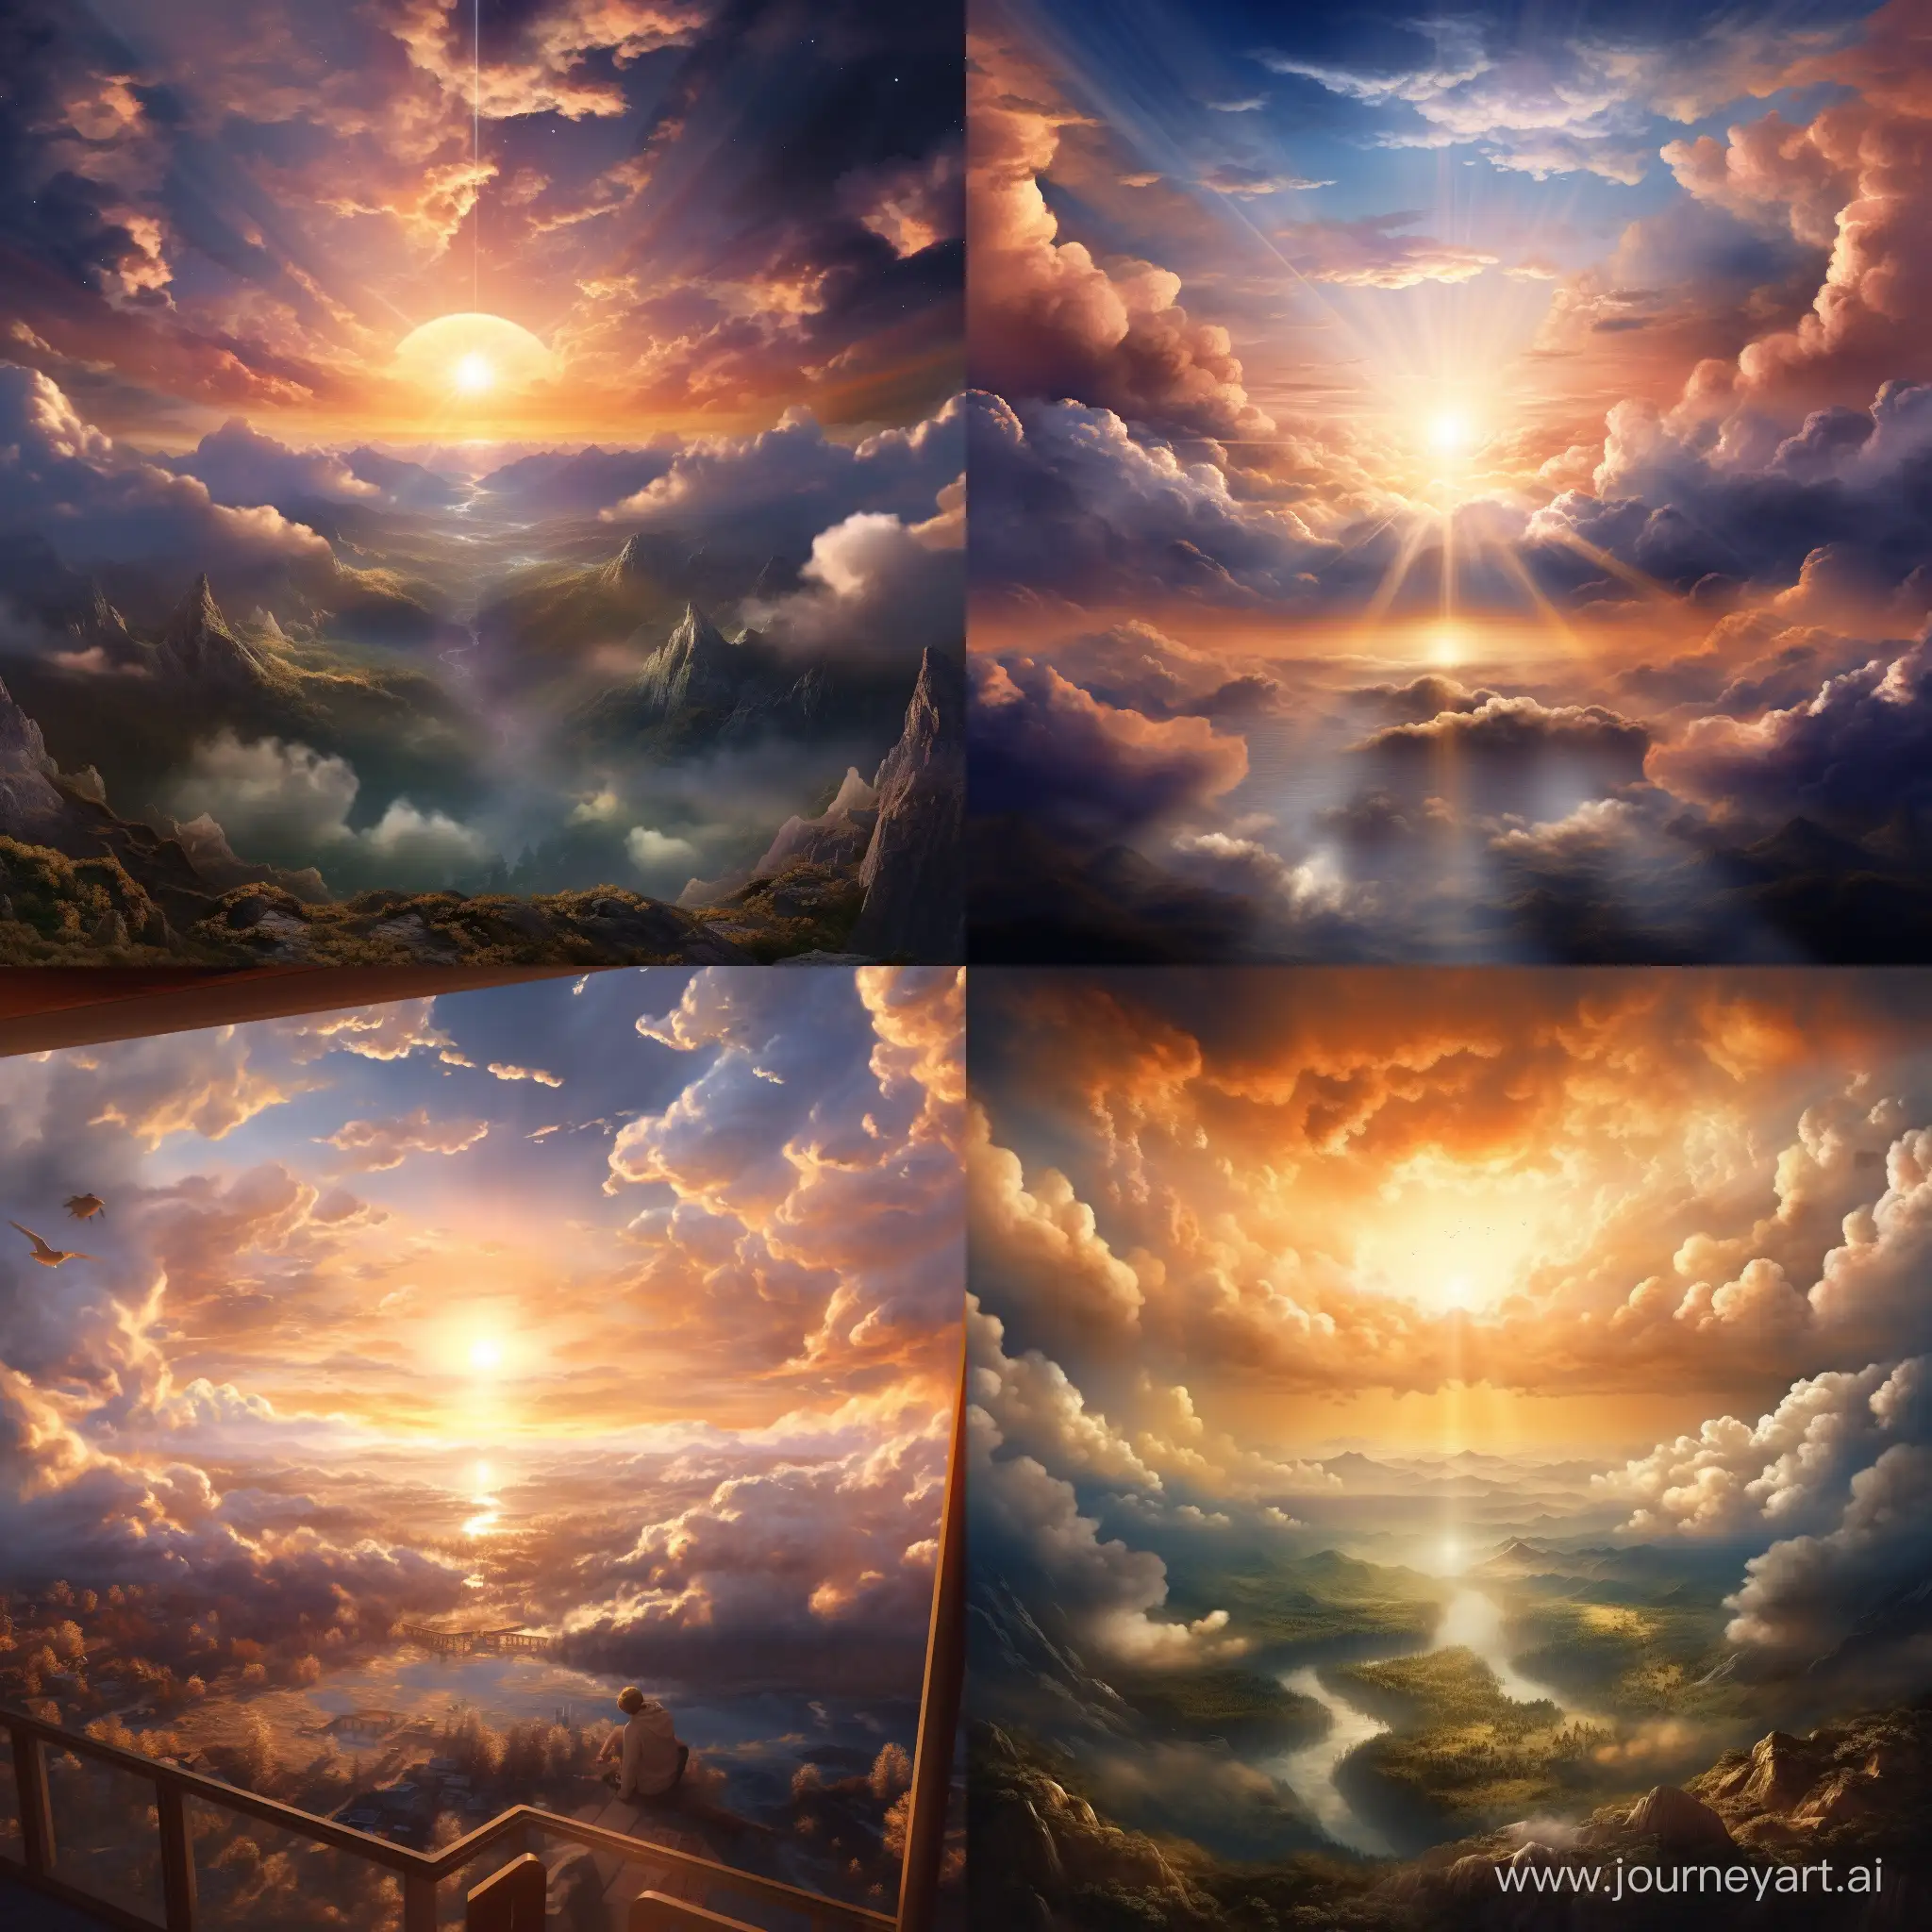 /imagine hyper realistic sunrise in heaven 